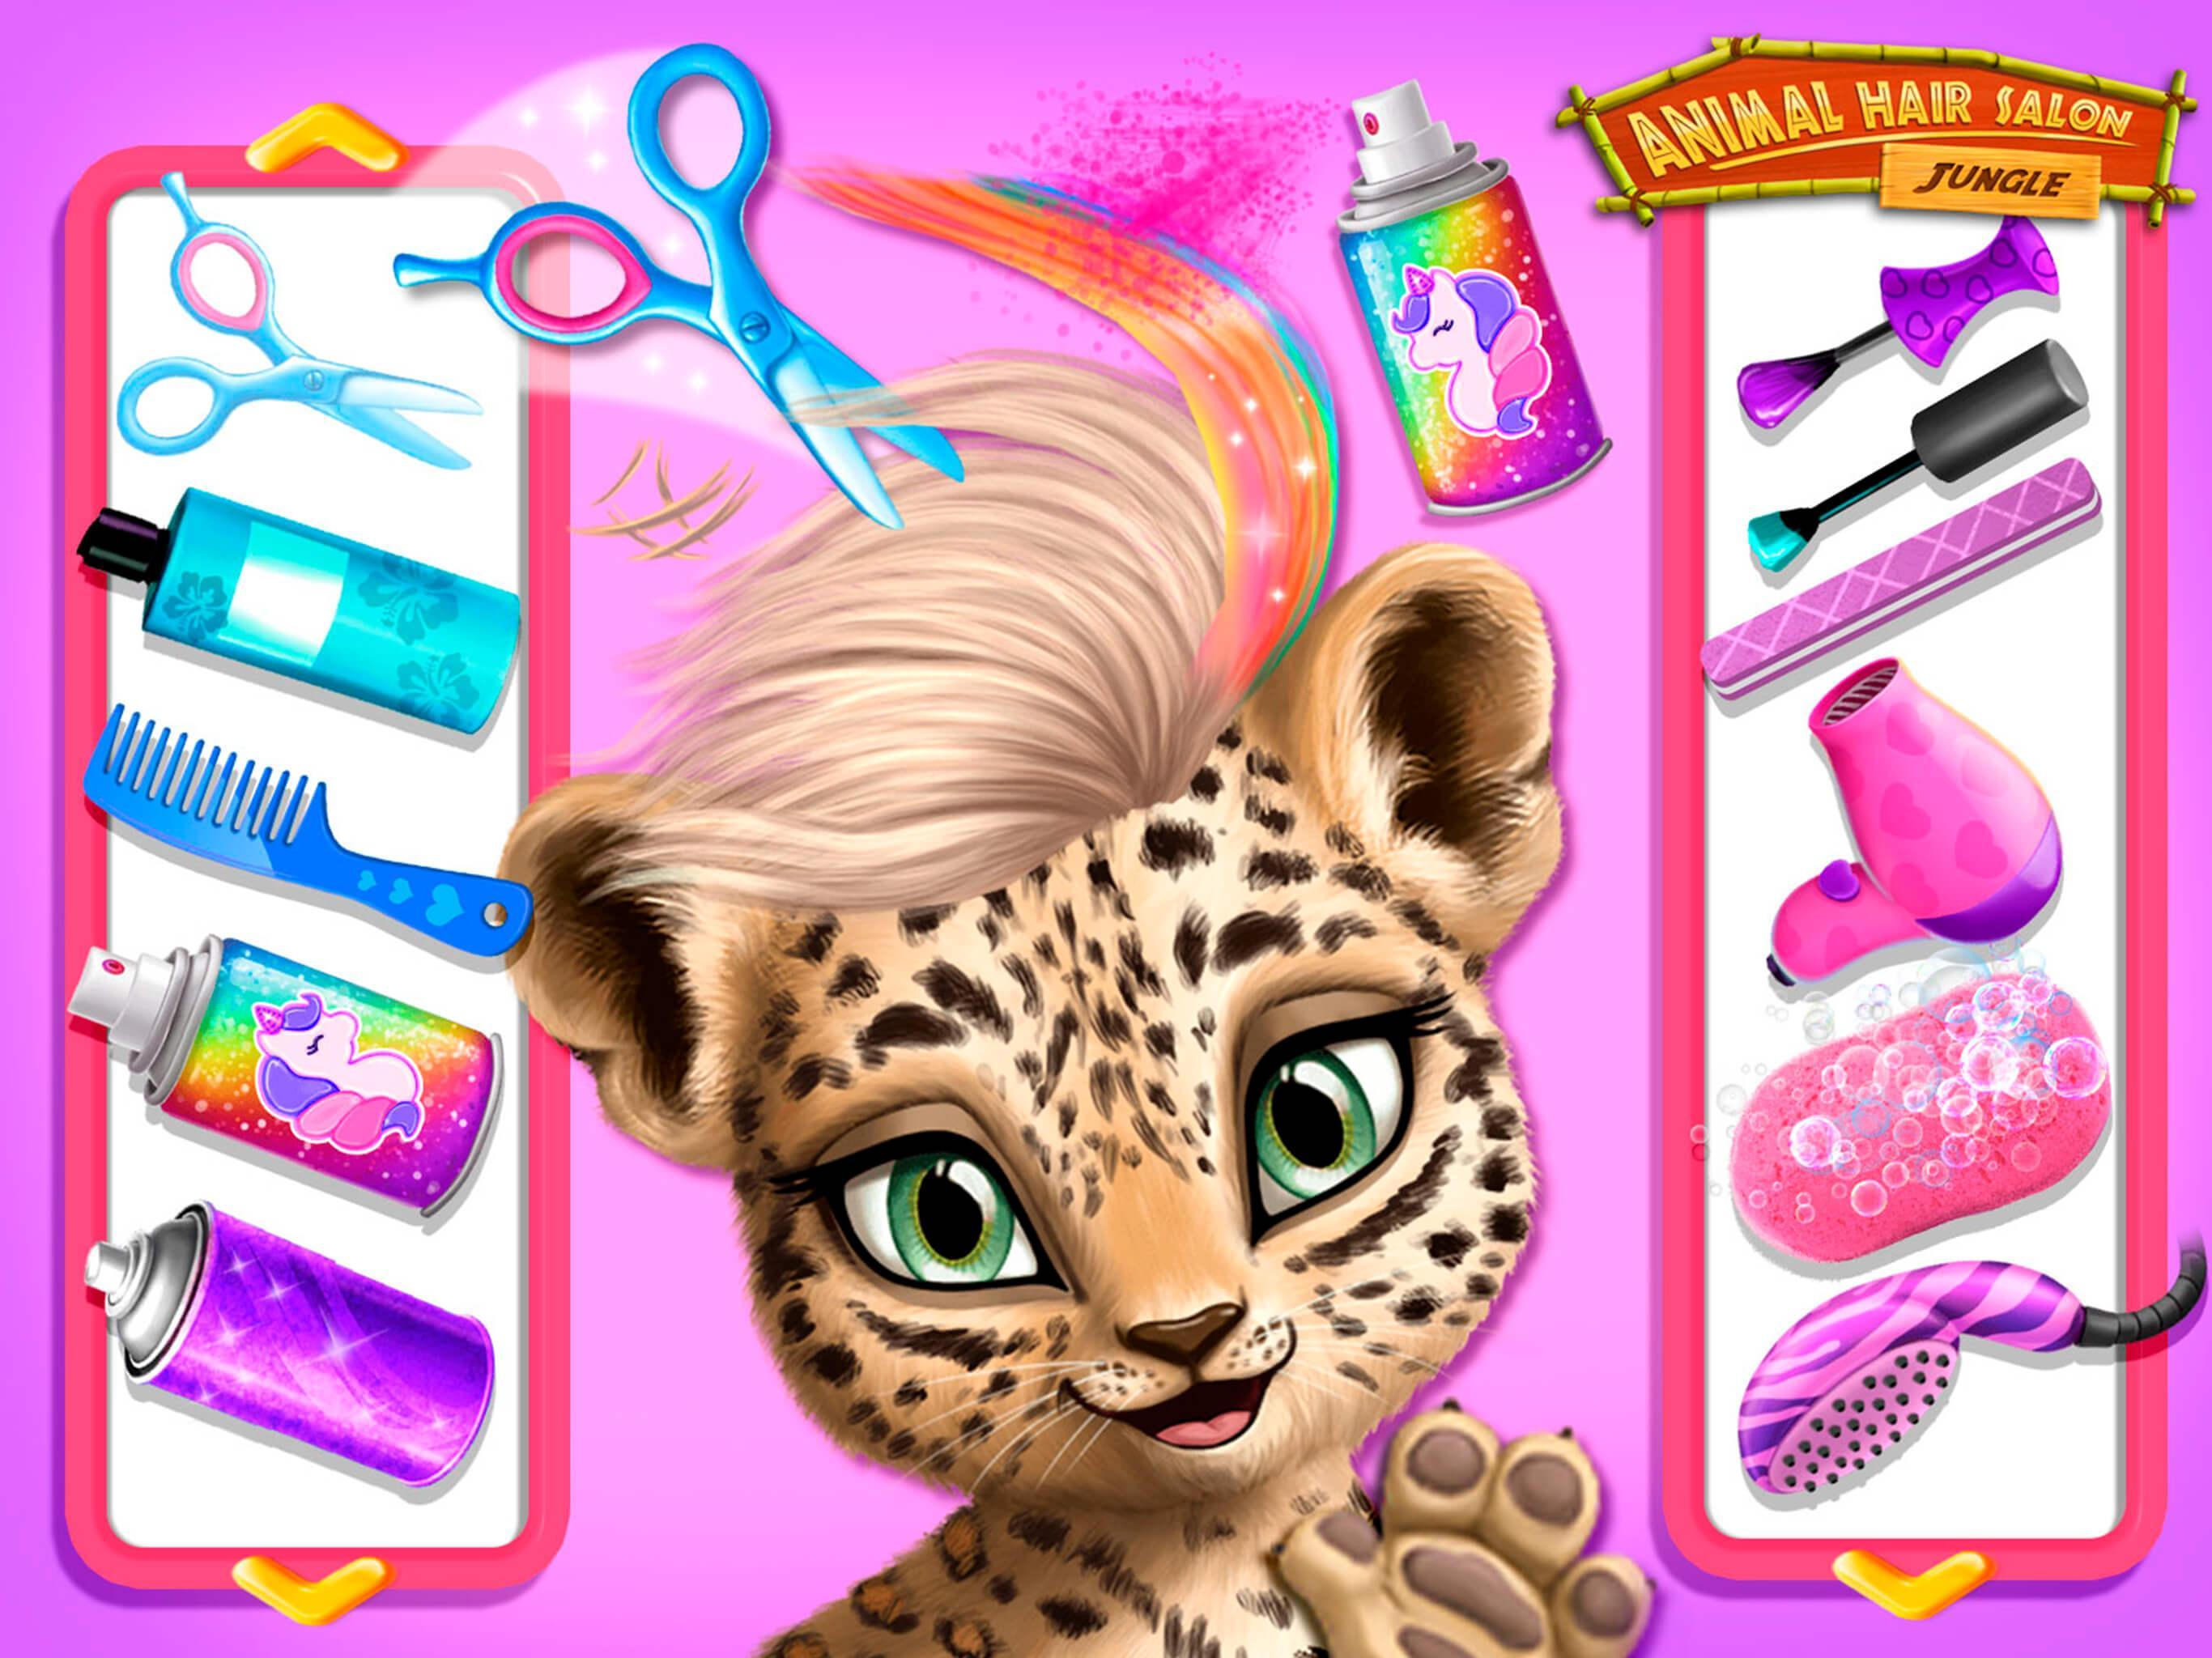 Jungle Animal Hair Salon - Styling Game for Kids 3.0.46 Screenshot 11